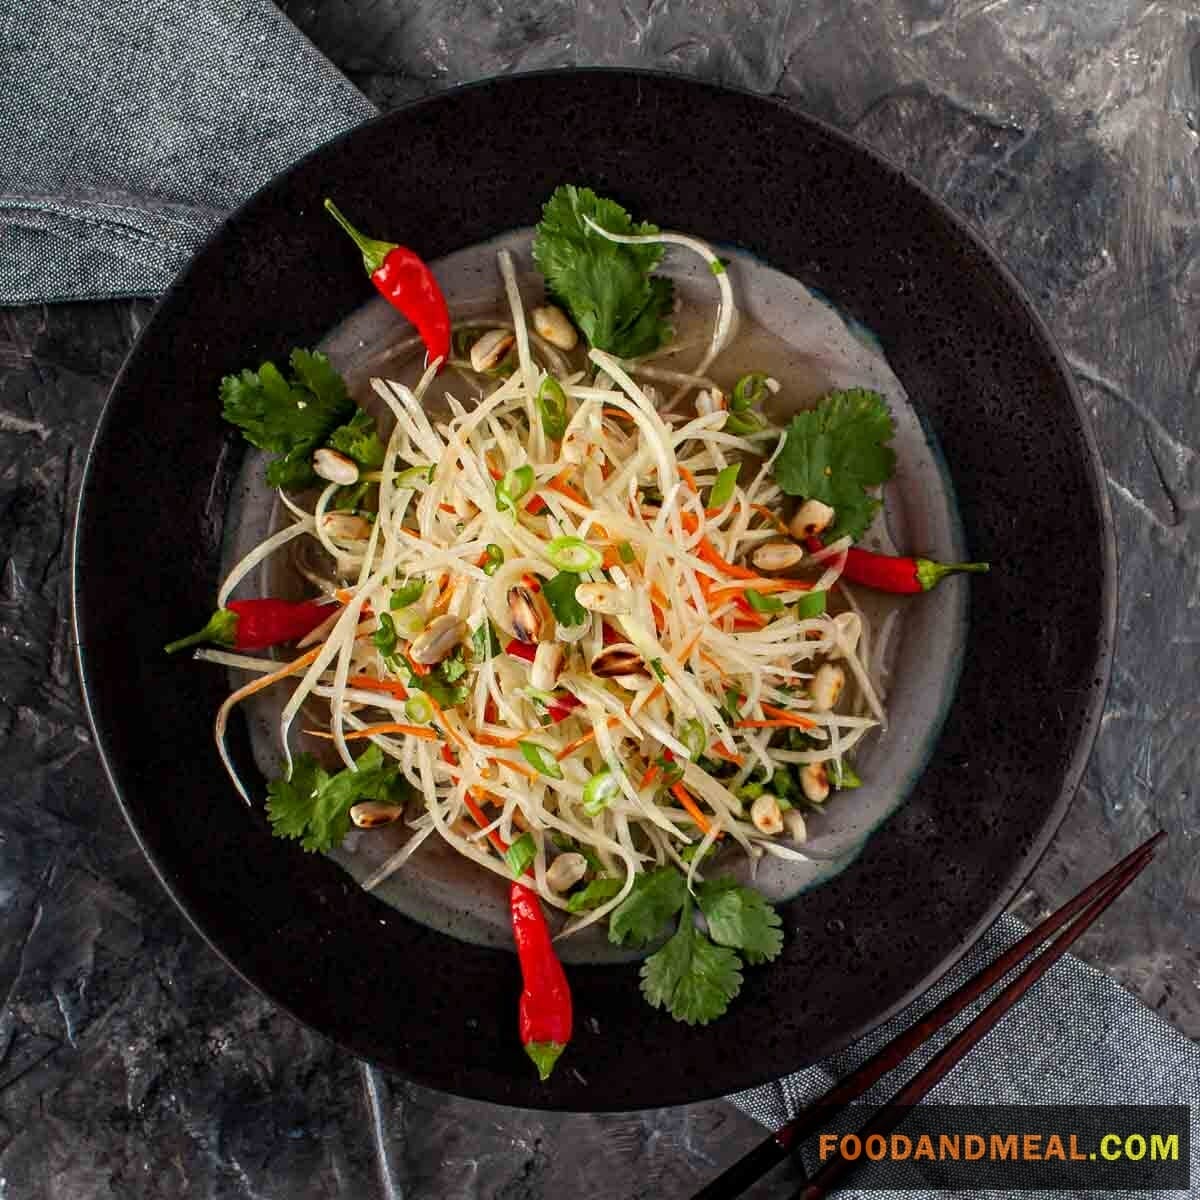 Vietnamese green papaya salad with beef jerky